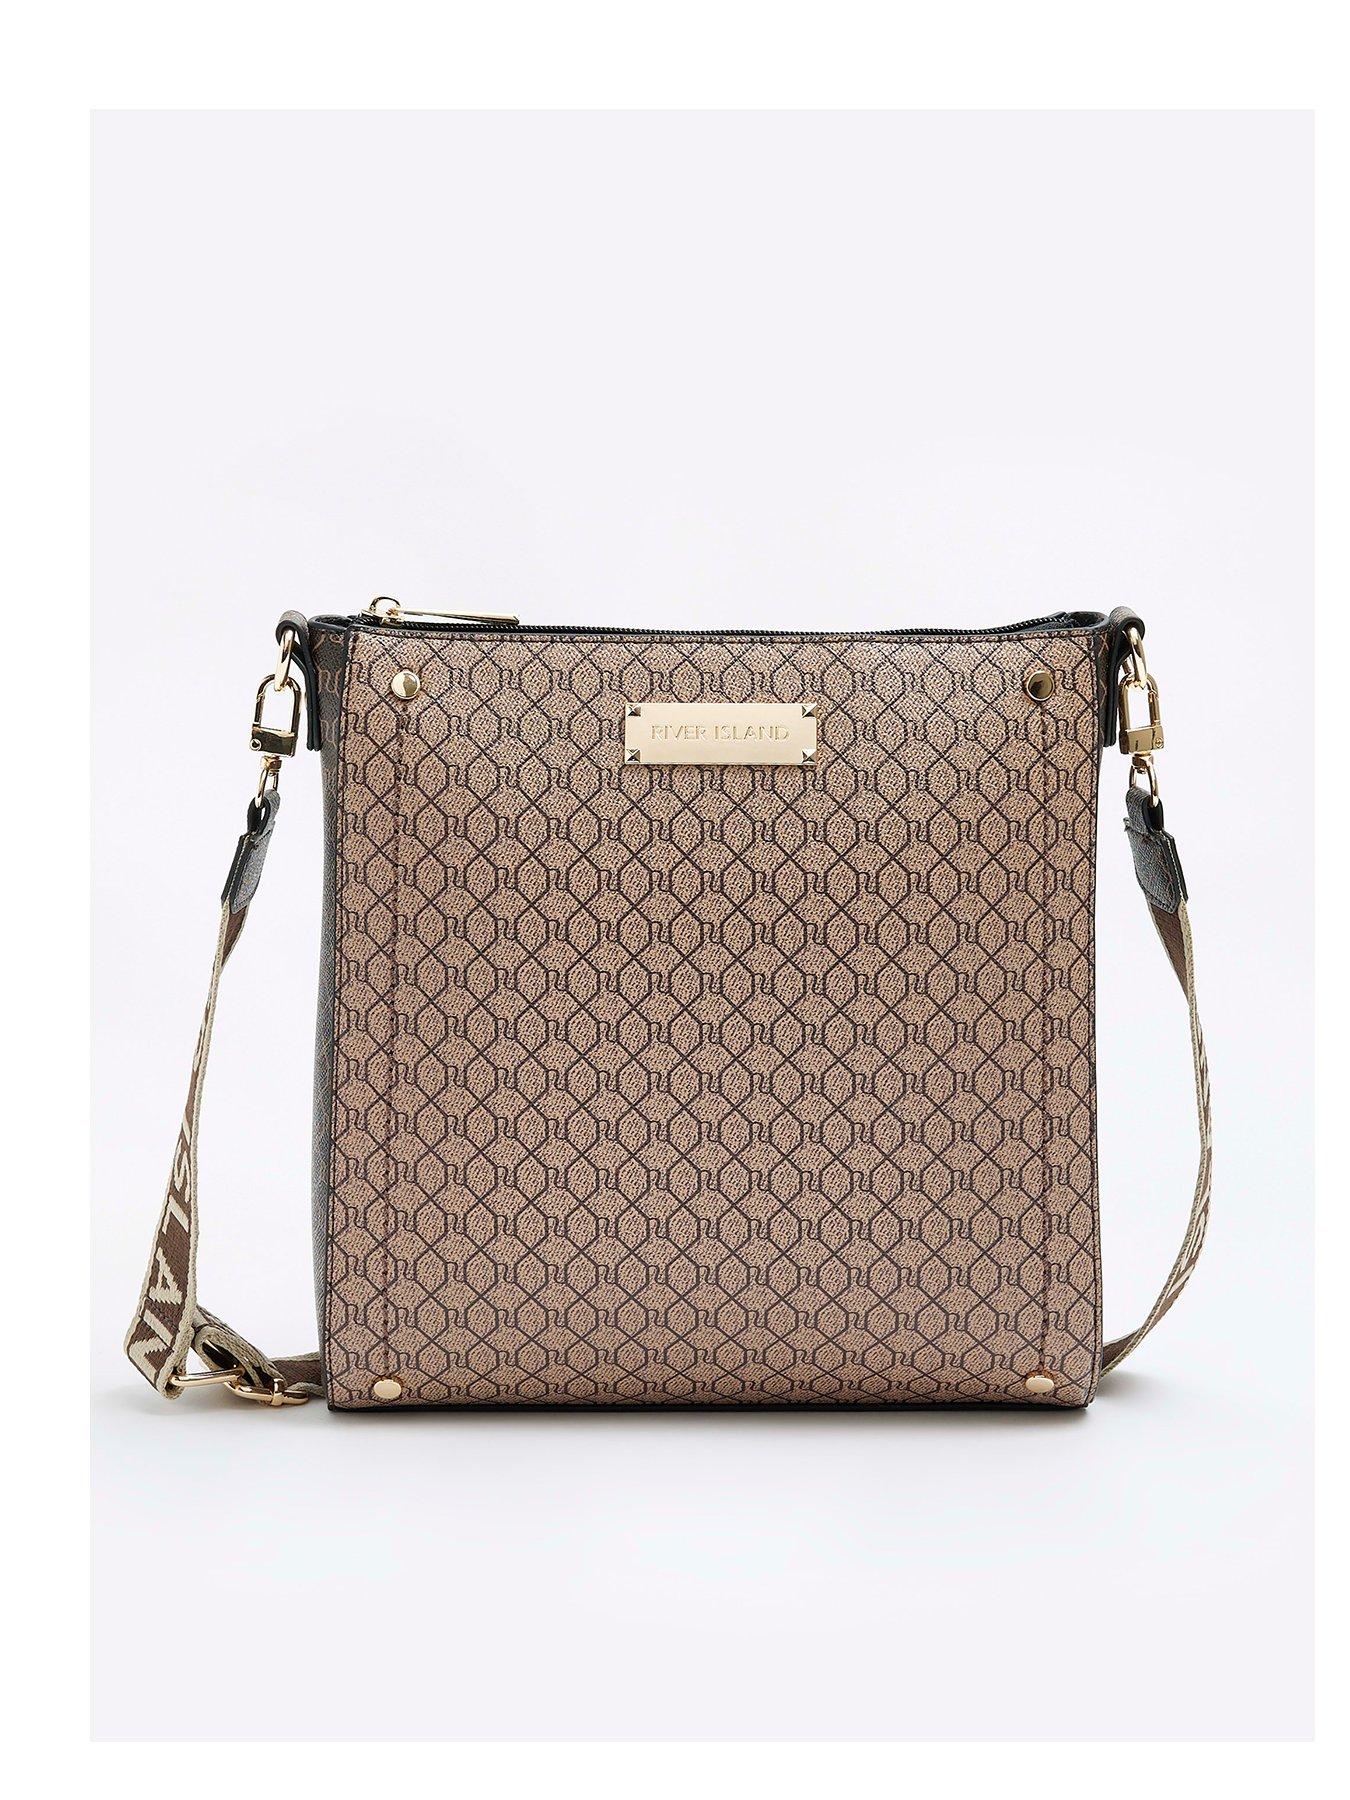 Buy Brandroot Handbags | Sling Bags for women & Girls | Ladies Purse Handbag  | Woman Gifts Bags (Black) at Amazon.in